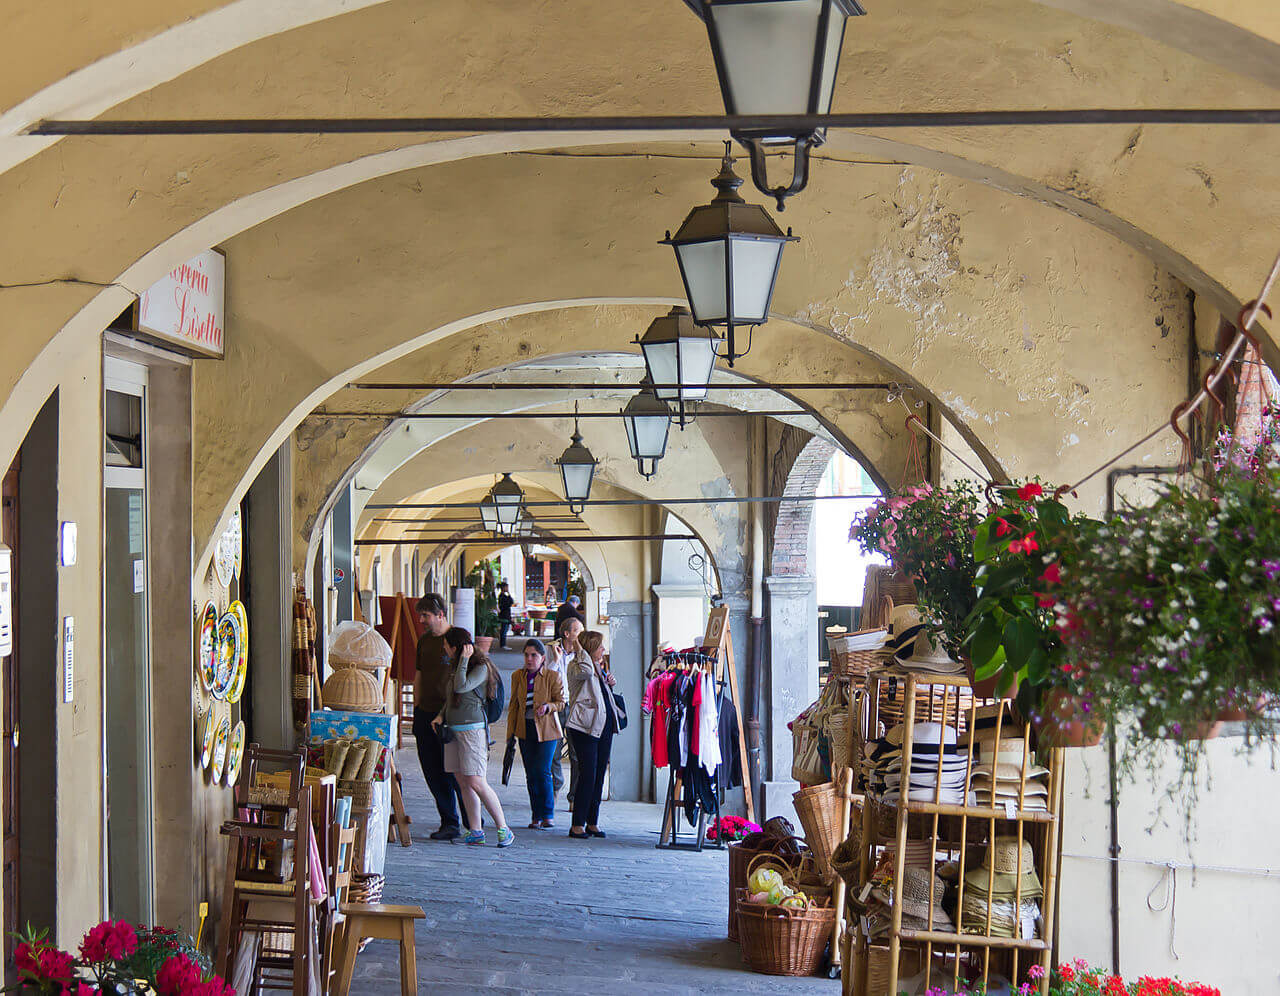 Arcades at the Piazza Giacomo Matteotti, Greve in Chianti